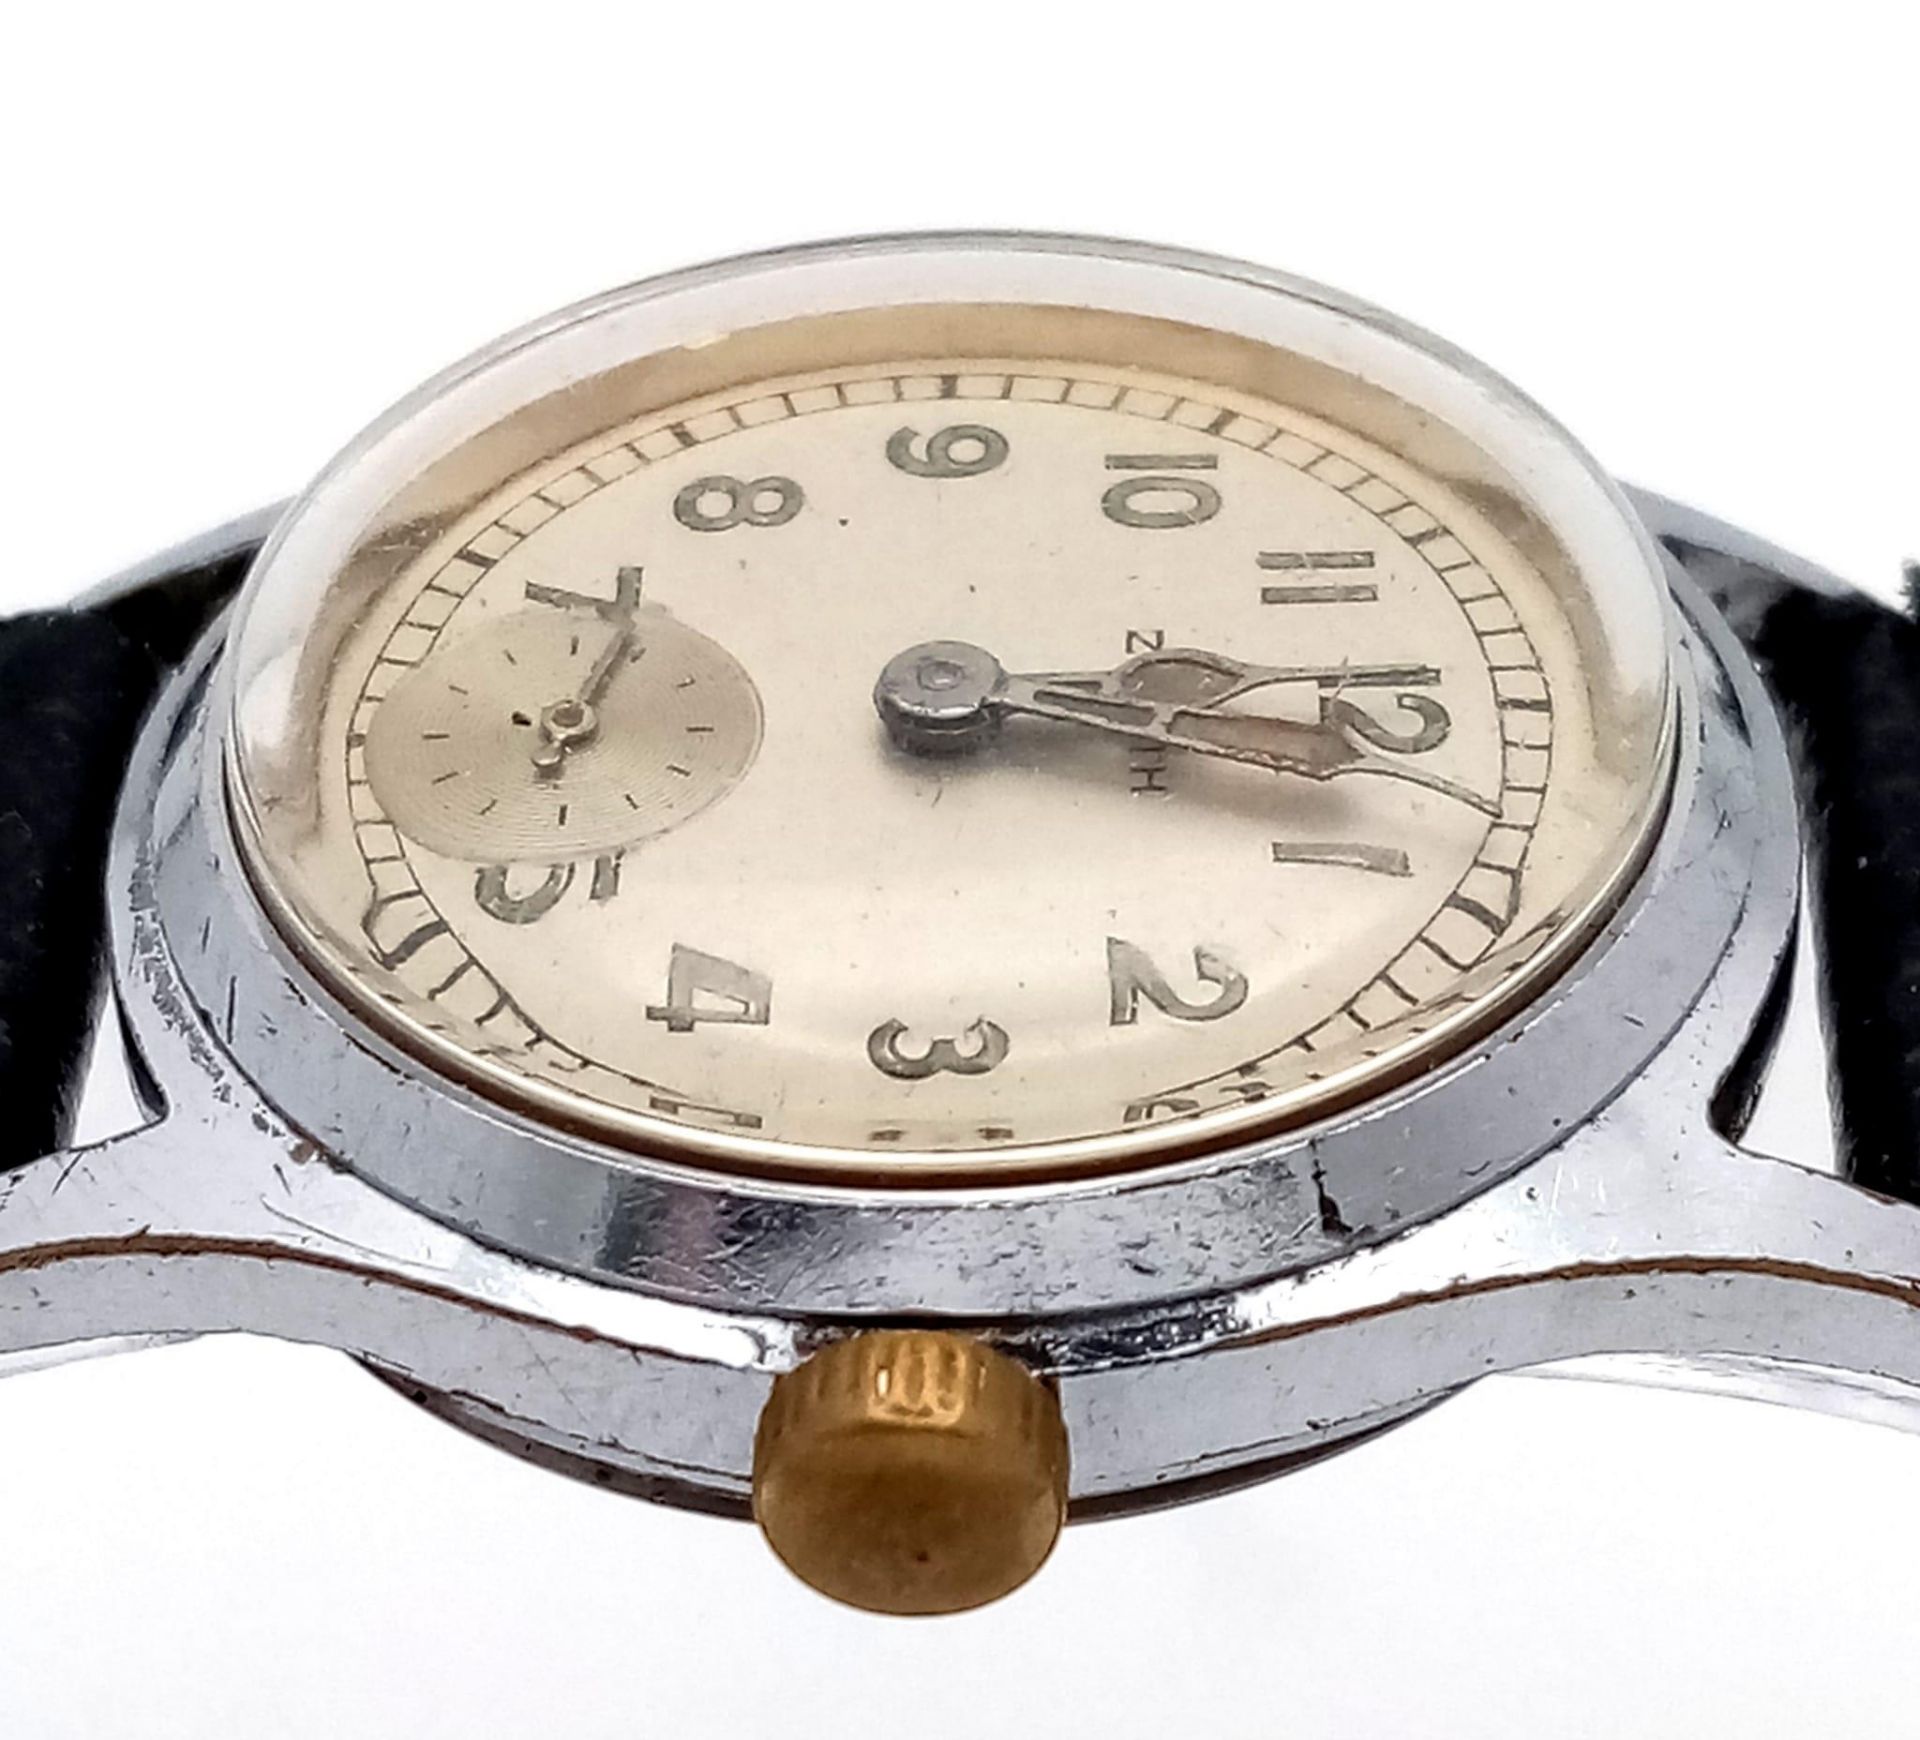 A Vintage Zenith Ladies Watch. Brown leather strap. Stainless steel case - 28mm. Silver tone dial - Bild 5 aus 8